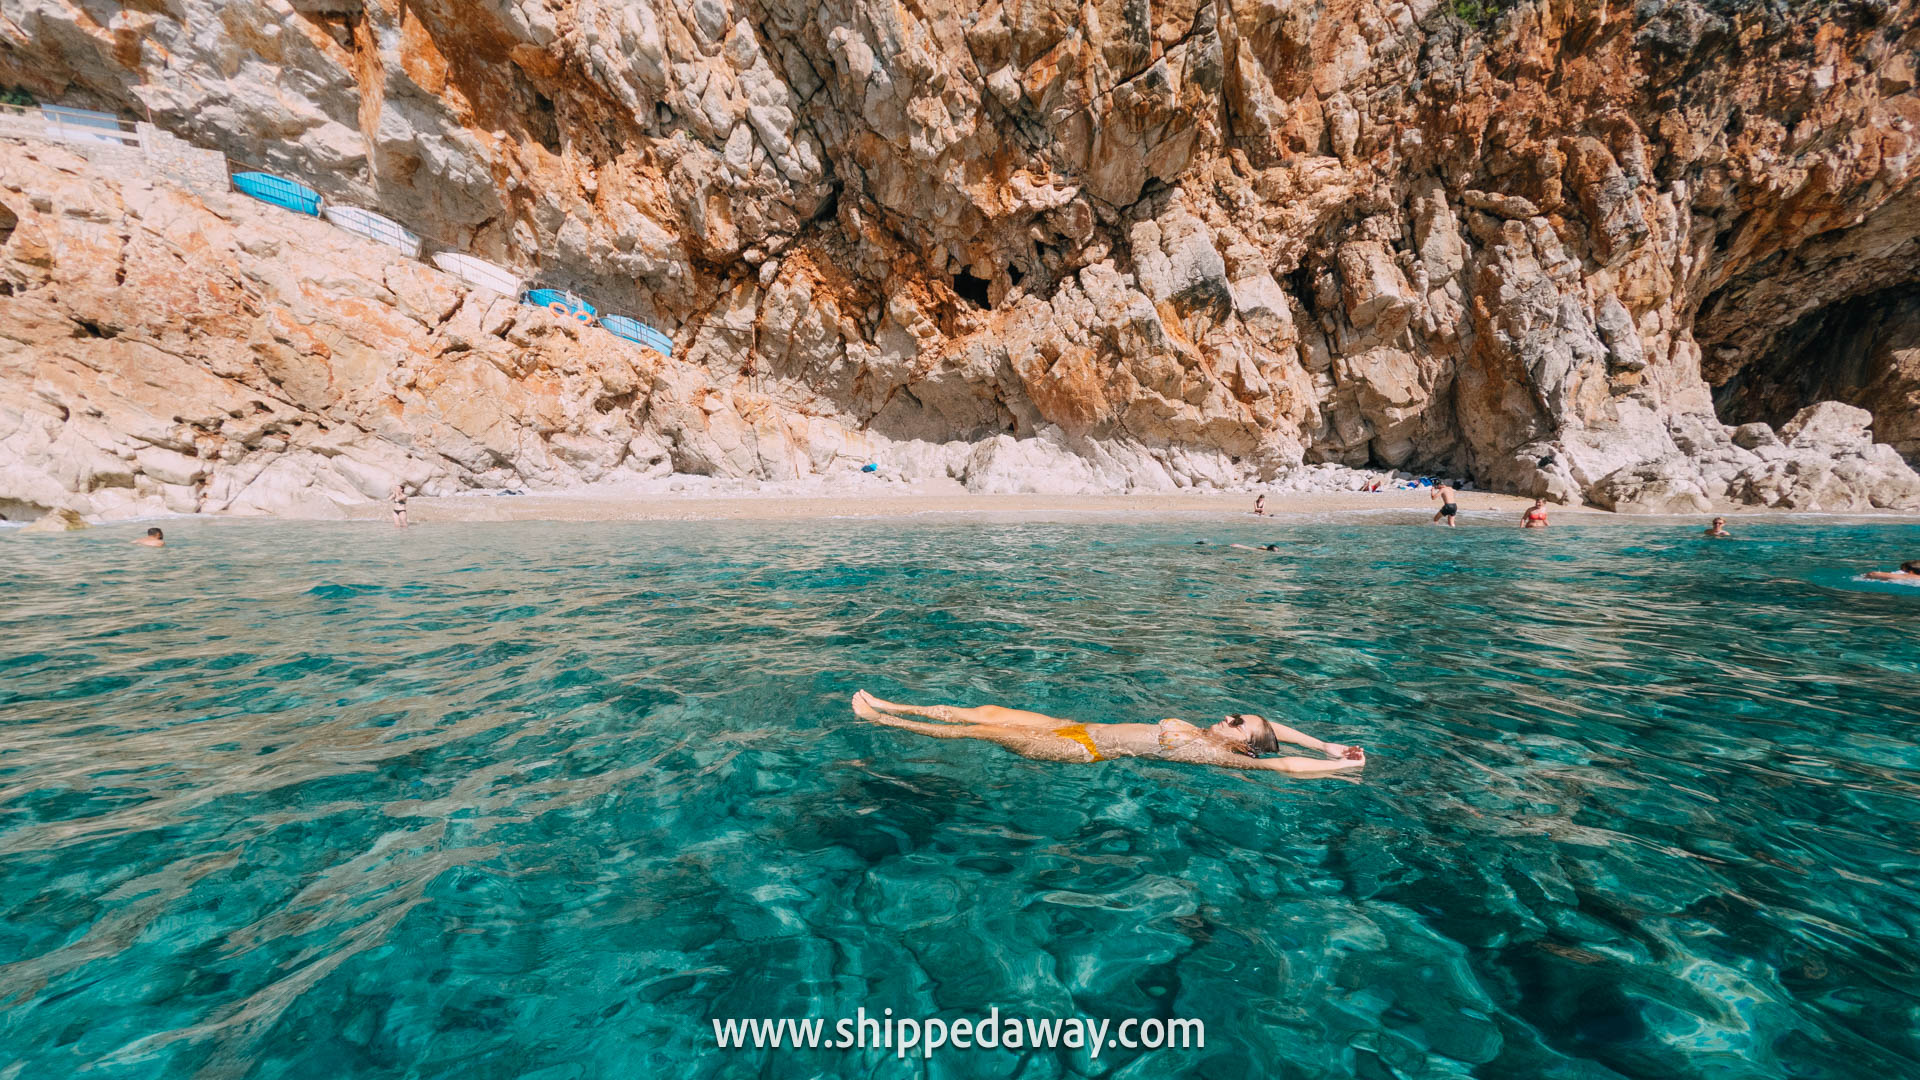 Best Dubrovnik Beaches - Dubrovnik Beaches - Best Beaches in Dubrovnik - Dubrovnik Beaches Guide - Best Beaches in Dubrovnik as recommended by a local - Pasjaca Beach